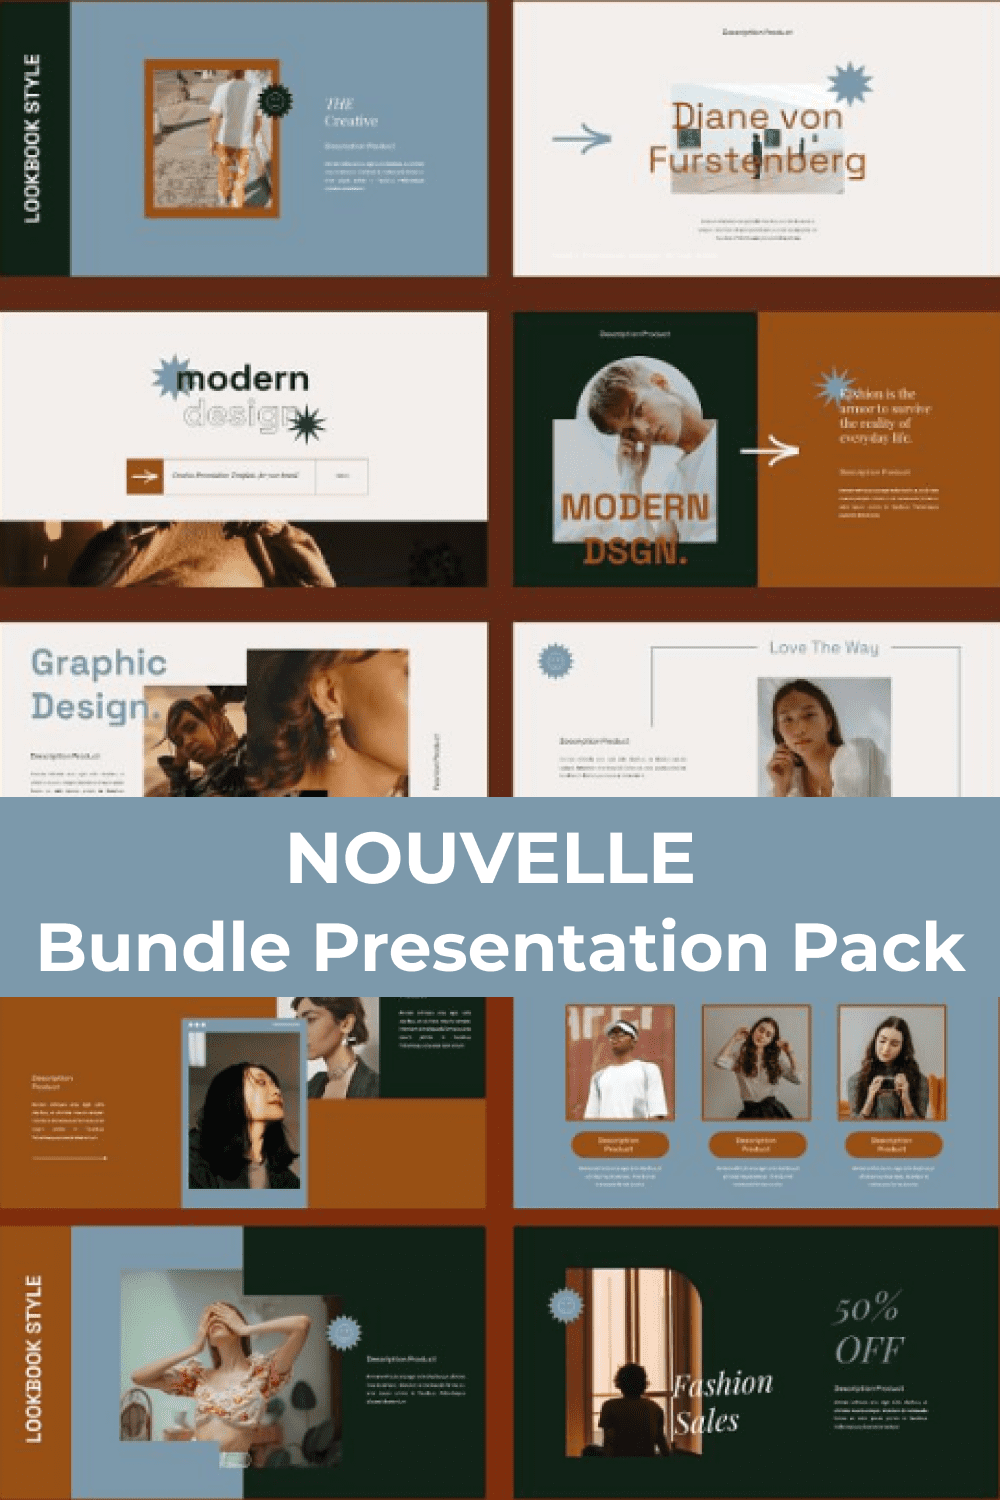 NOUVELLE Bundle Presentation Pack Pinterest.